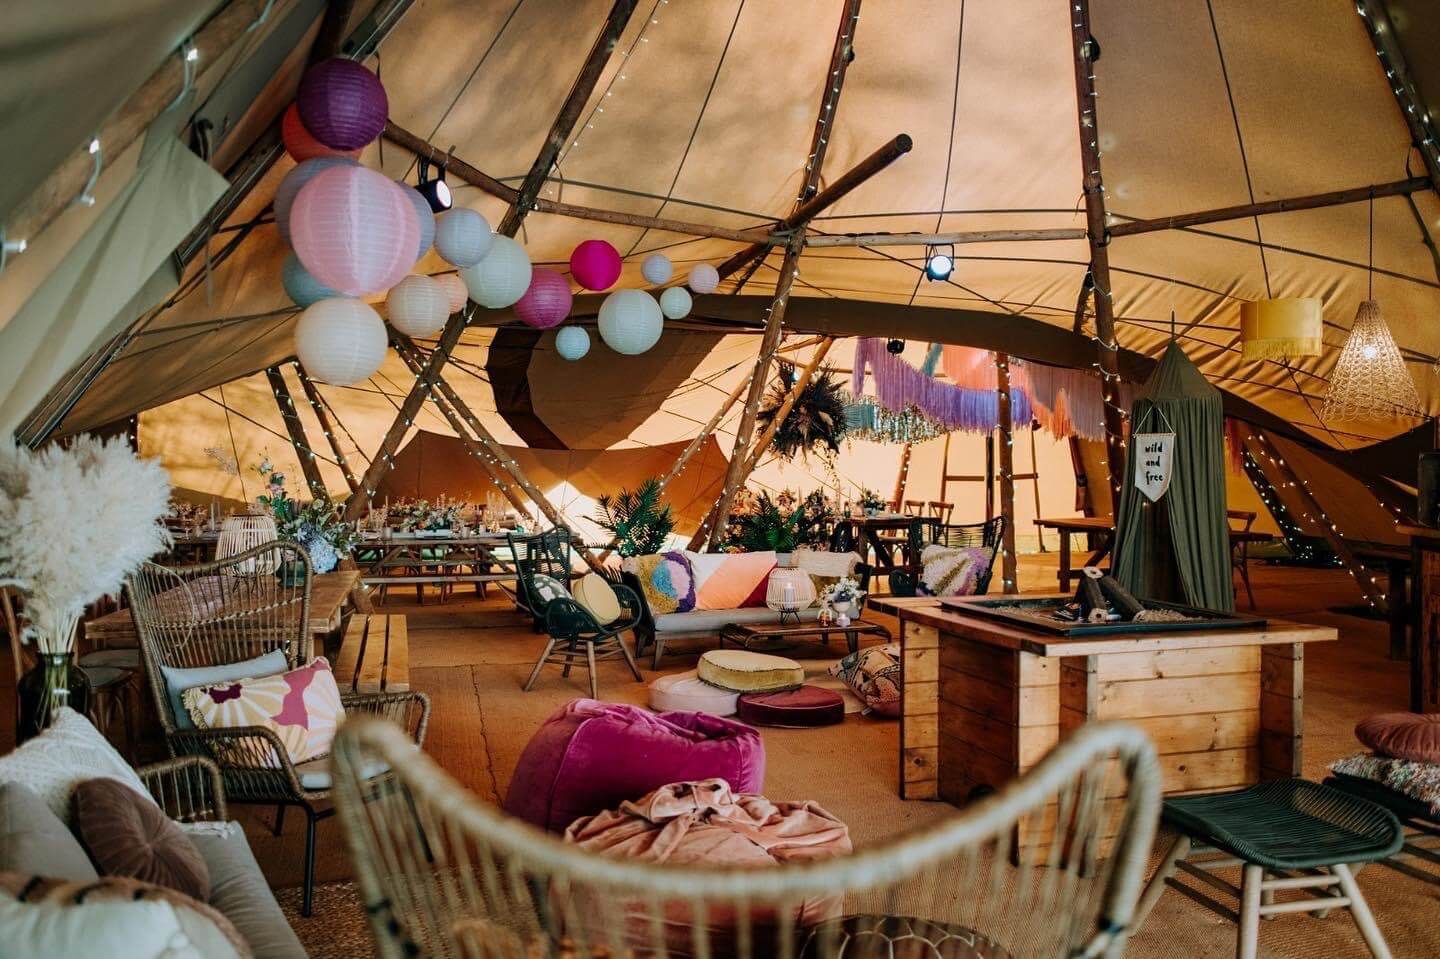 Setup inside a tent full of comfy seating